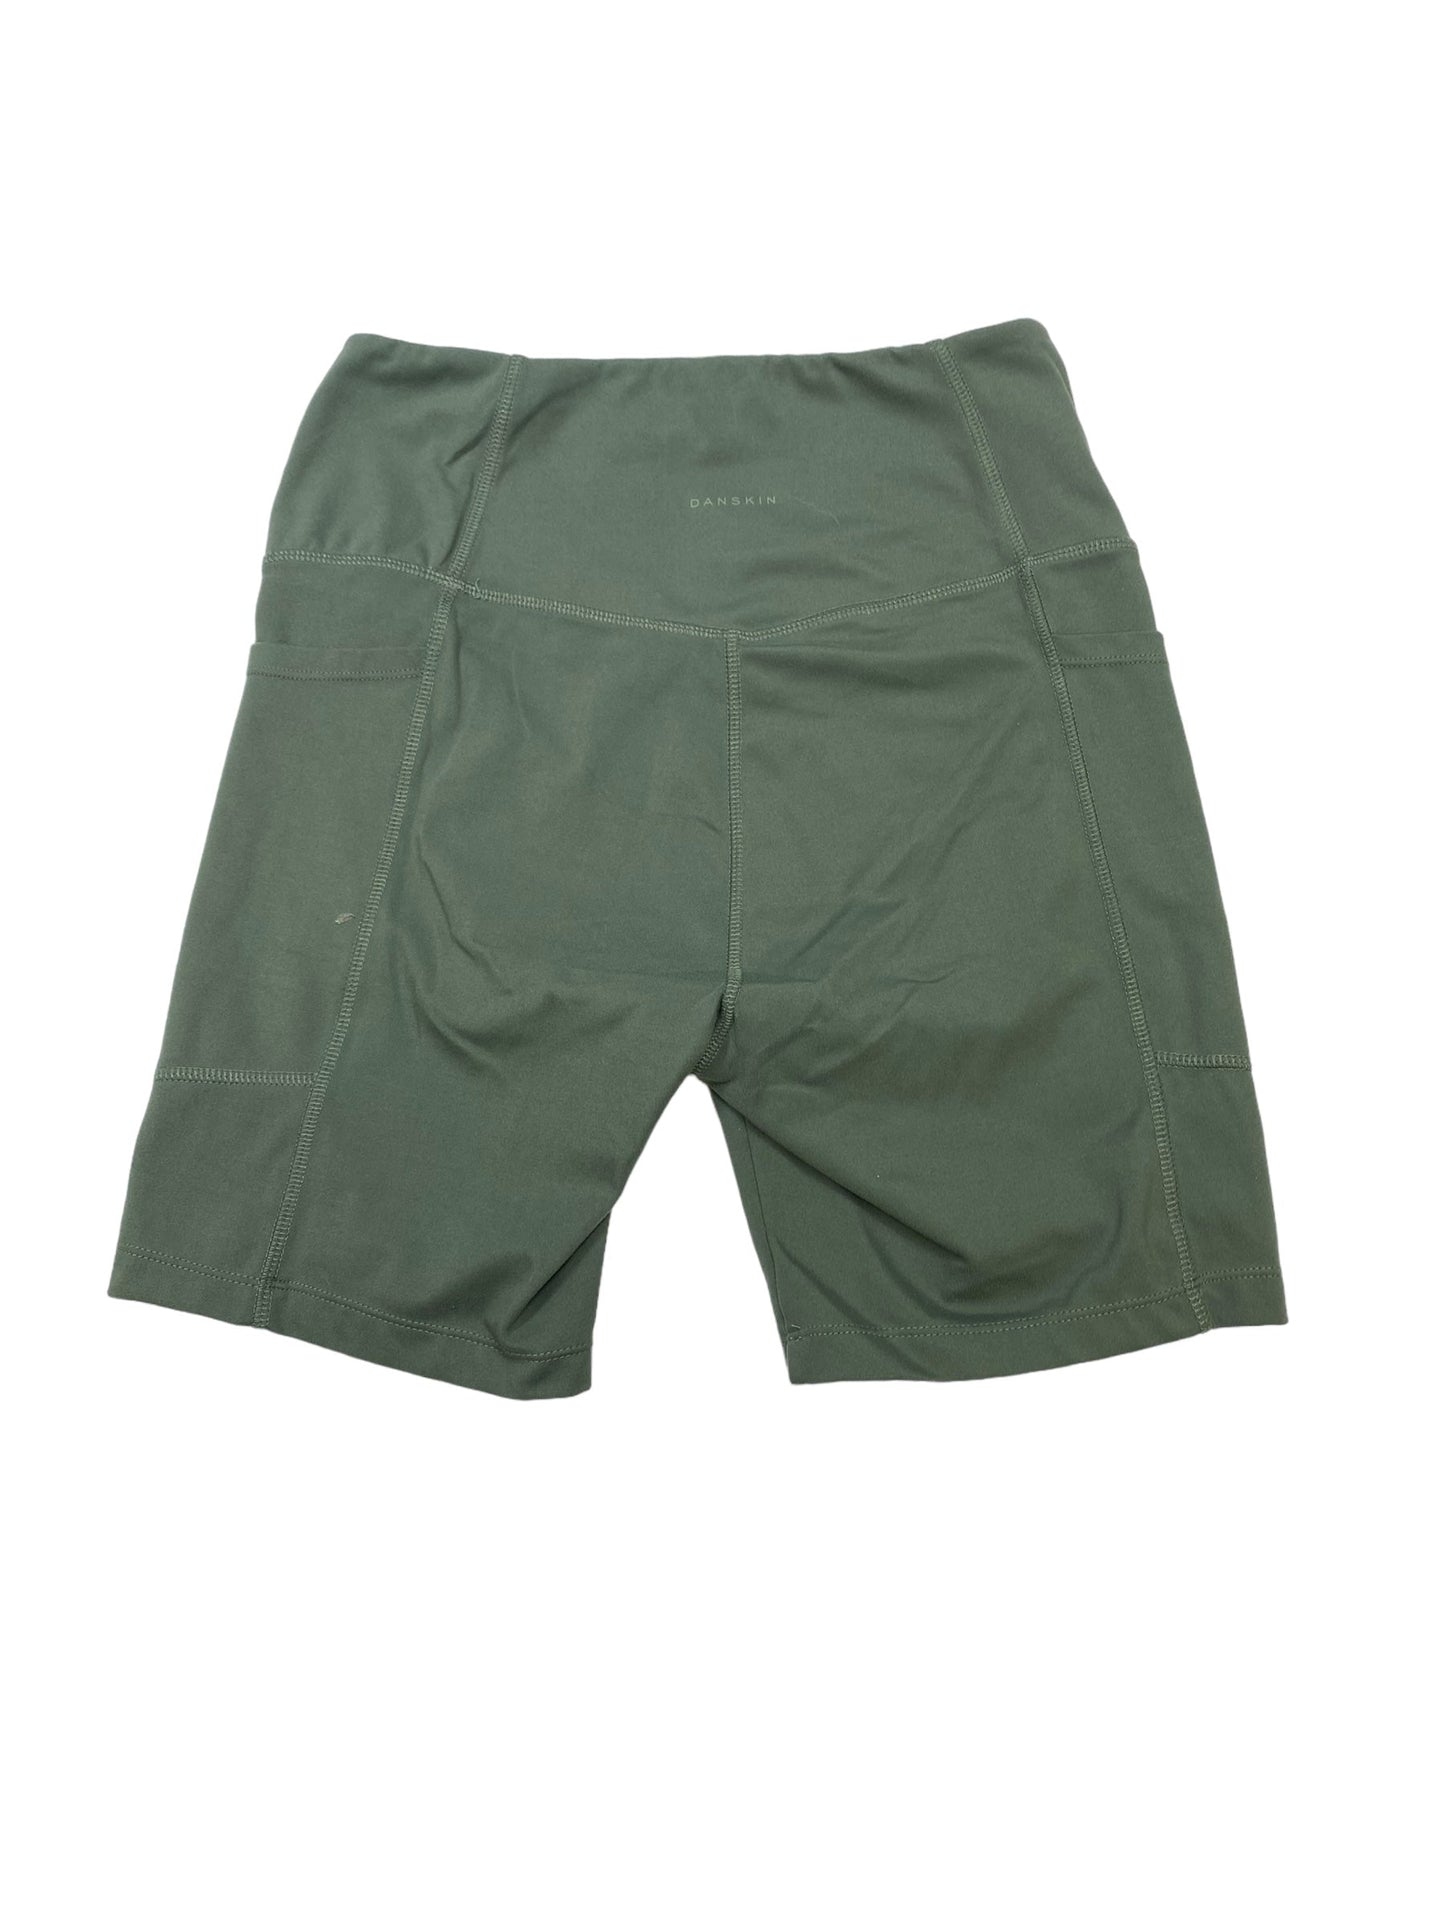 Green Athletic Shorts Danskin, Size M